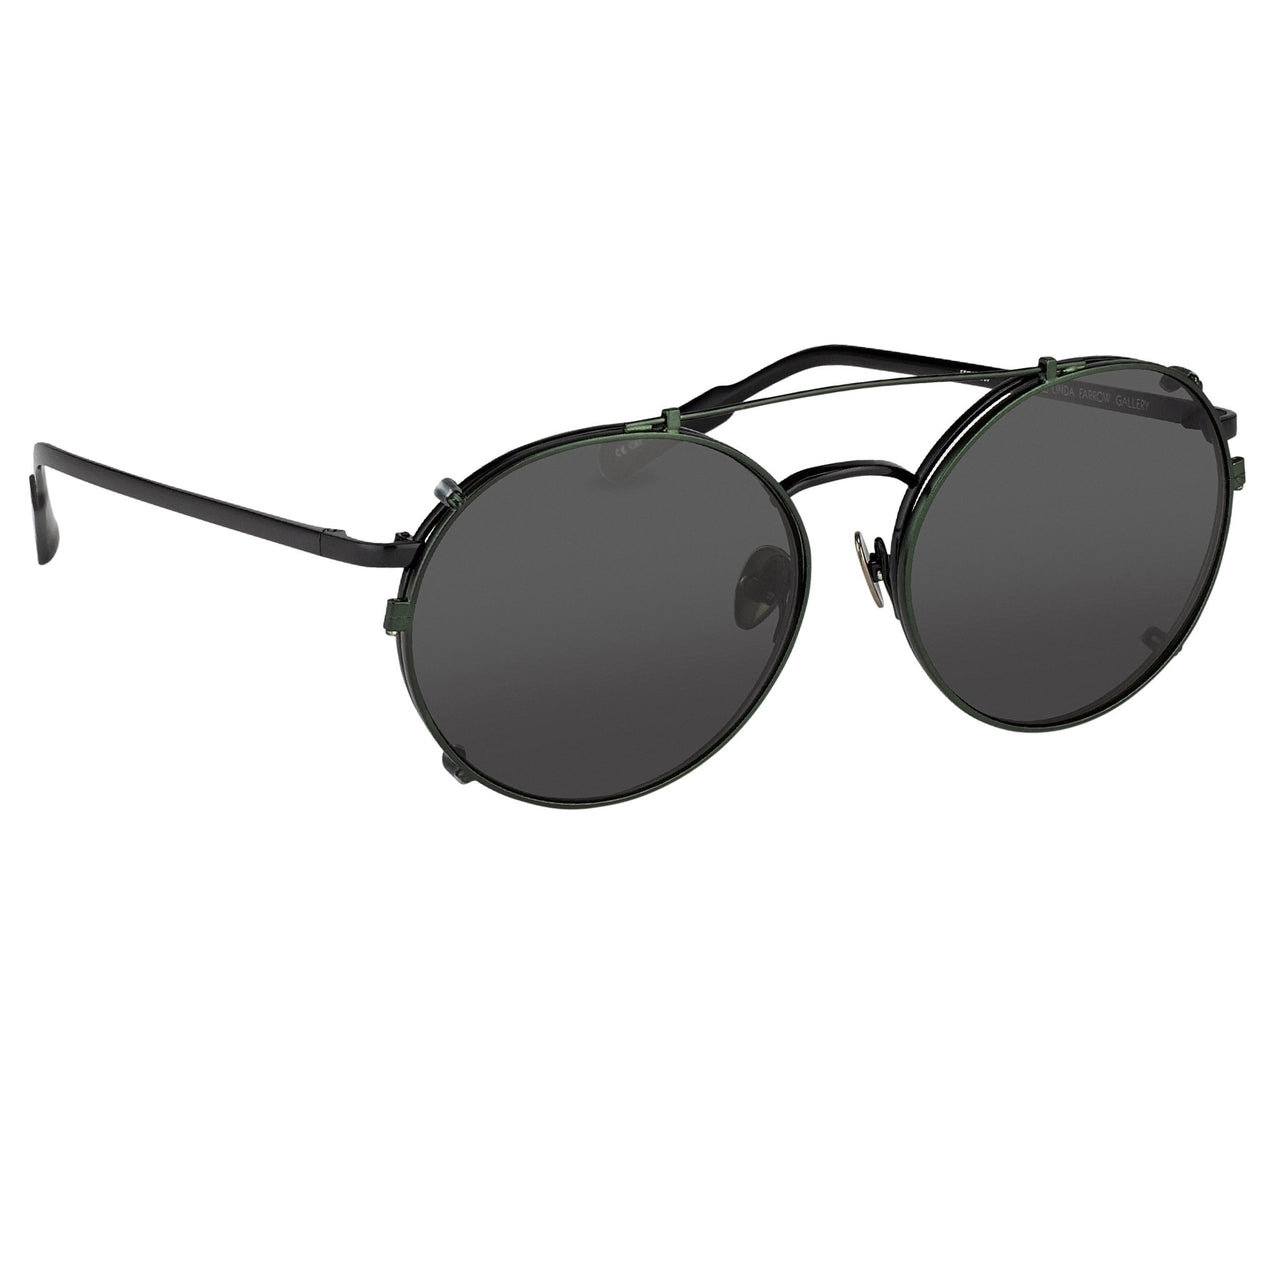 kris van assche sunglasses unisex titanium oval shiny black green clip on and green lenses kva70c4sun